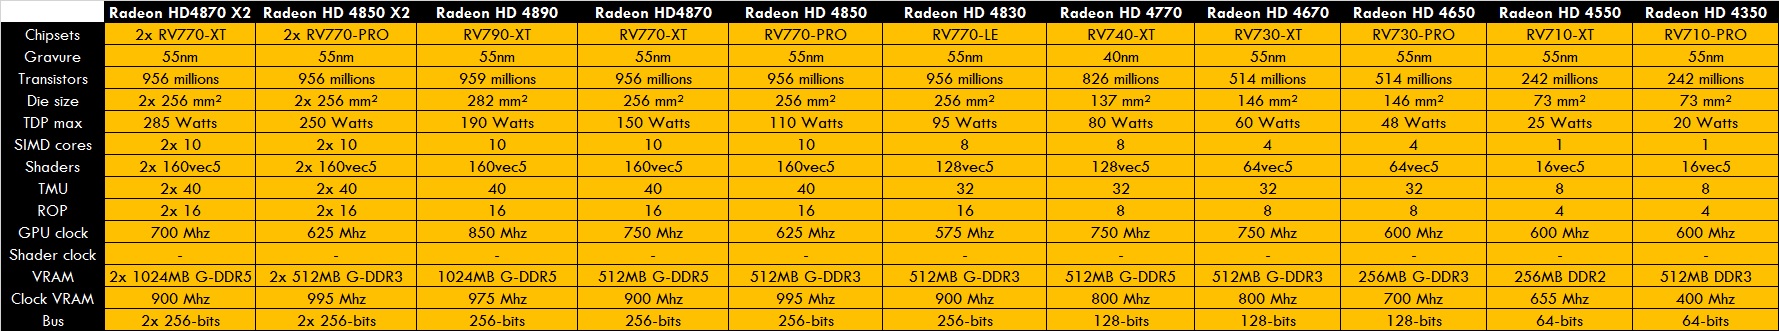 0_1490284938718_Radeon HD4000.jpg